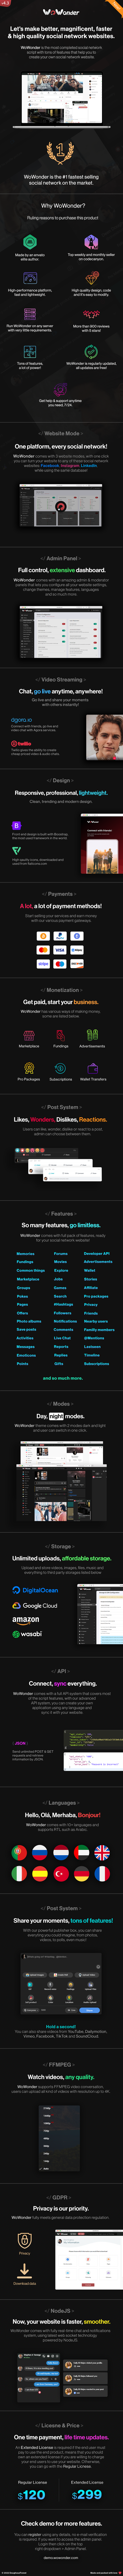 WoWonder: Platform Jejaring Sosial Open-Source yang Ramah Pengguna